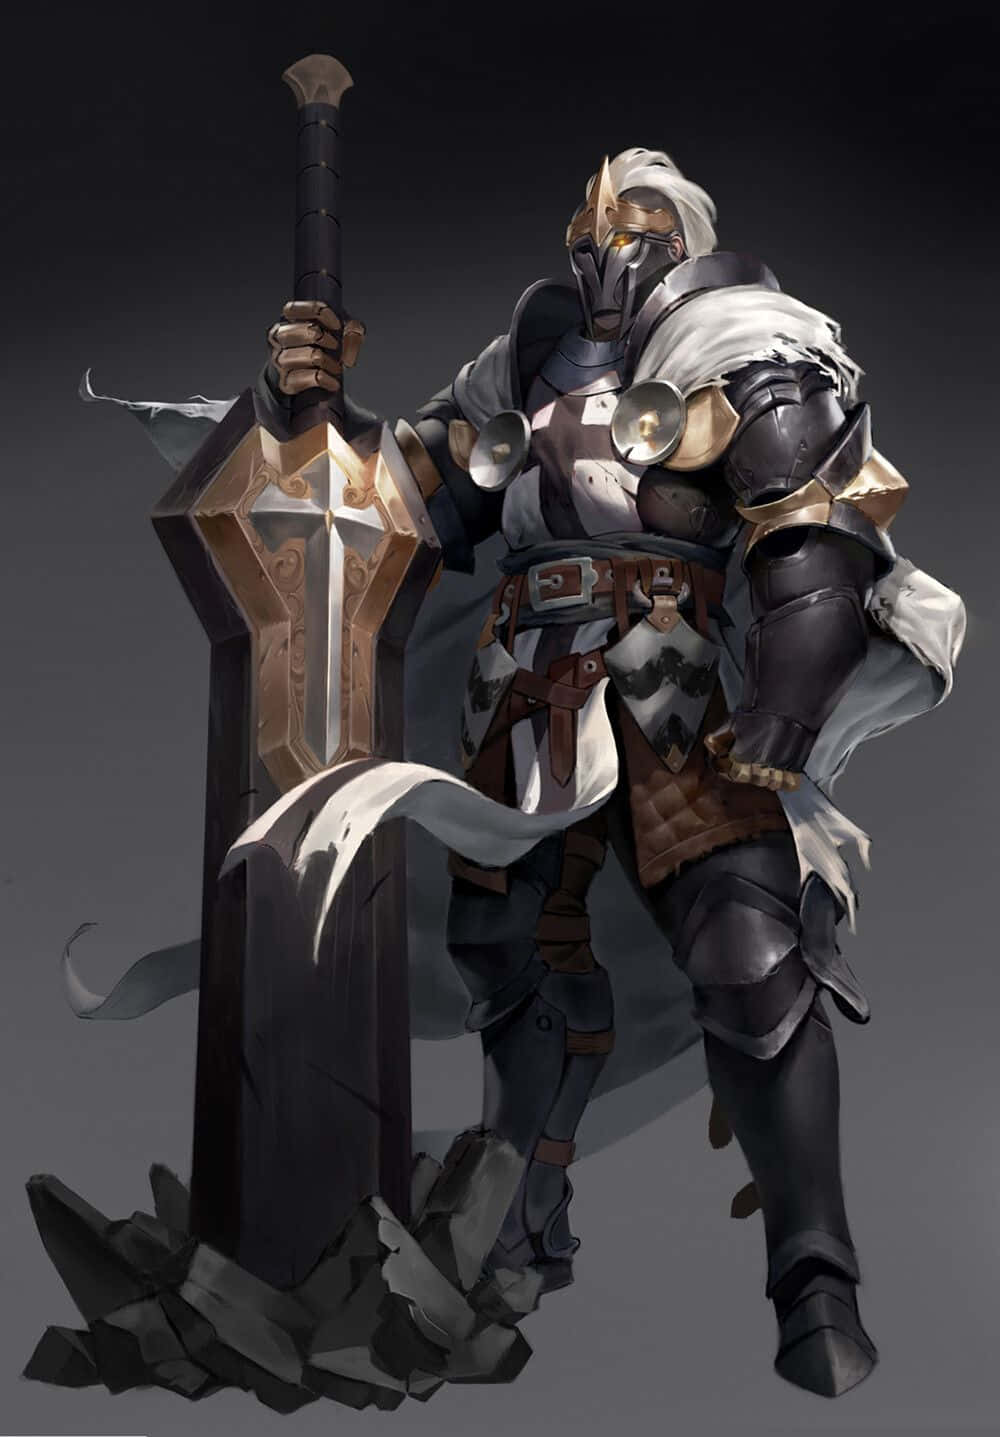 The Inspiring Strength of a Crusader